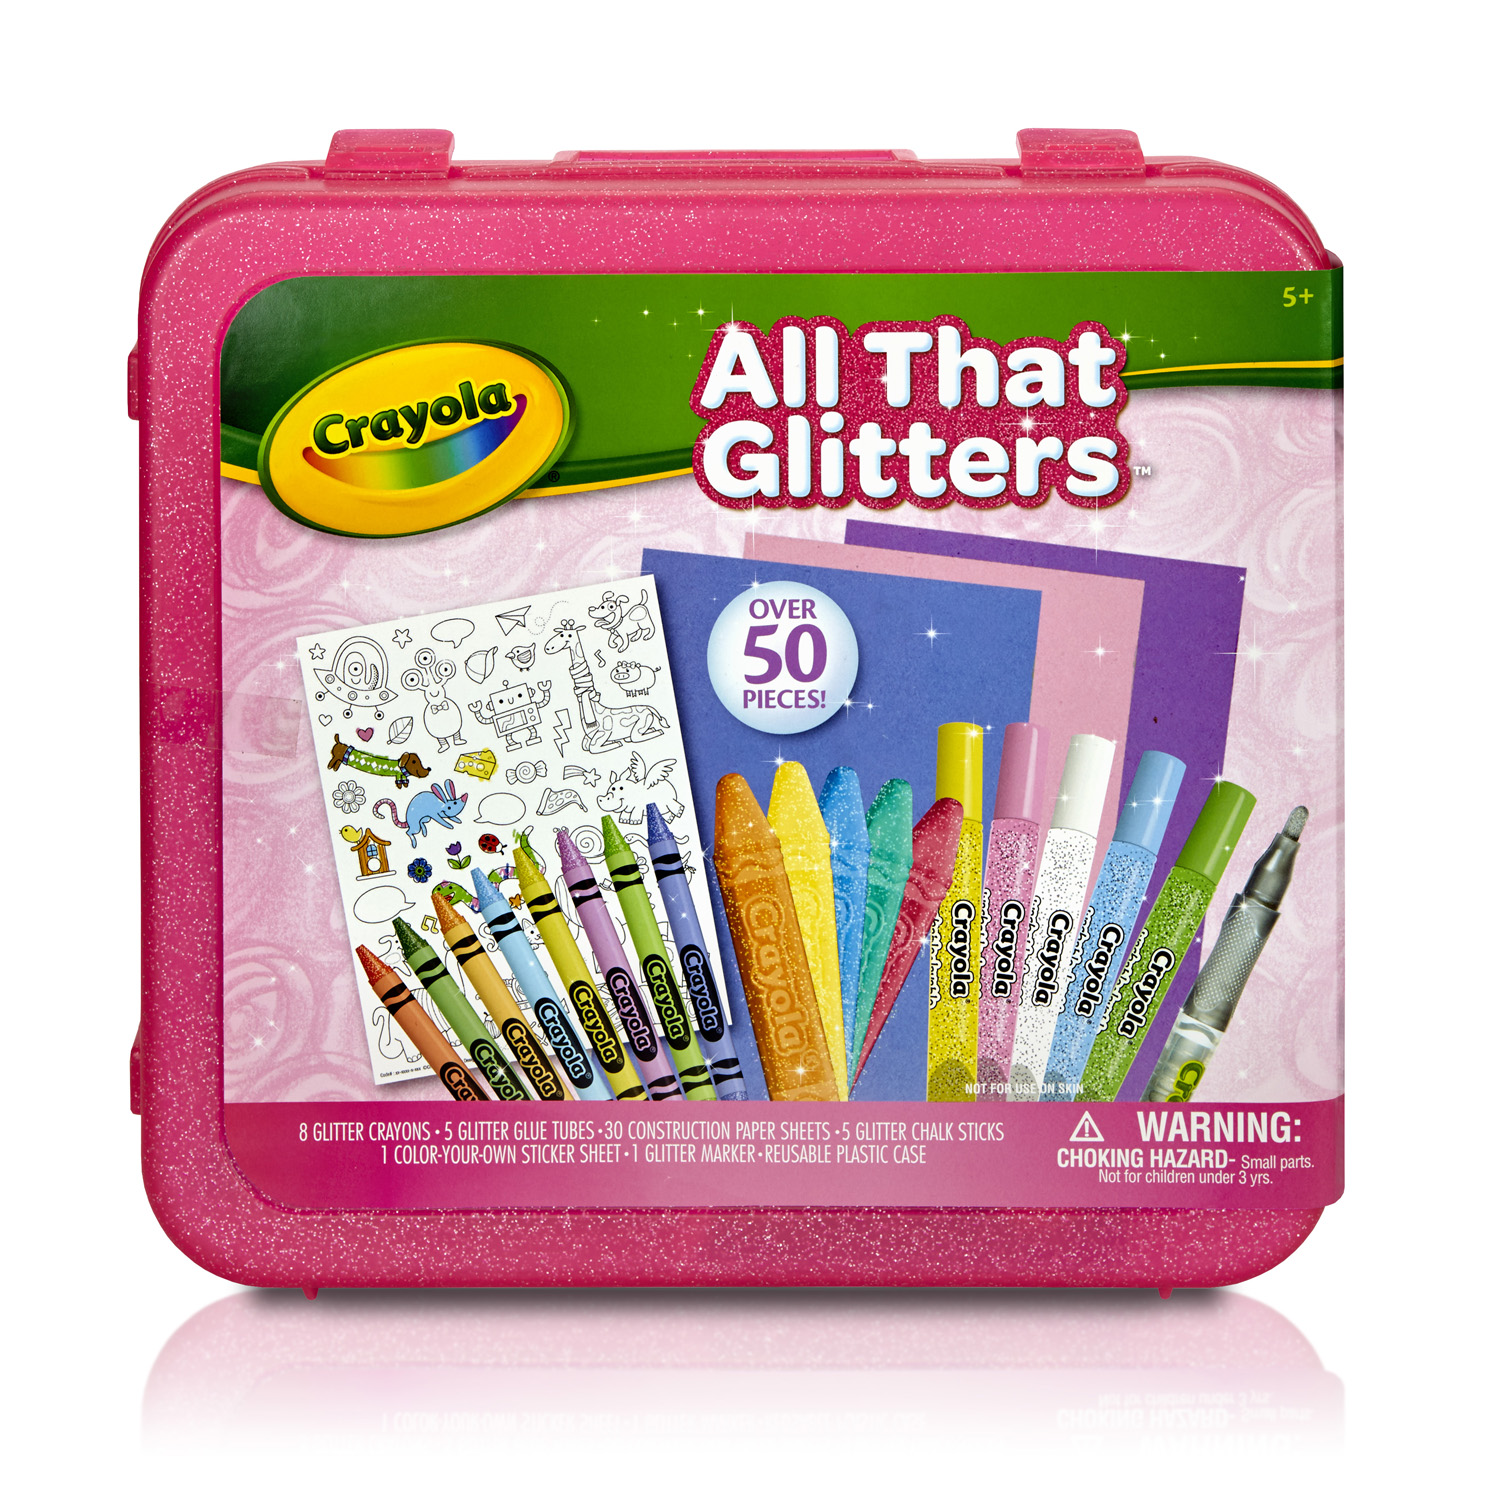 Crayola Ultra Clean Washable 64 Count Crayons